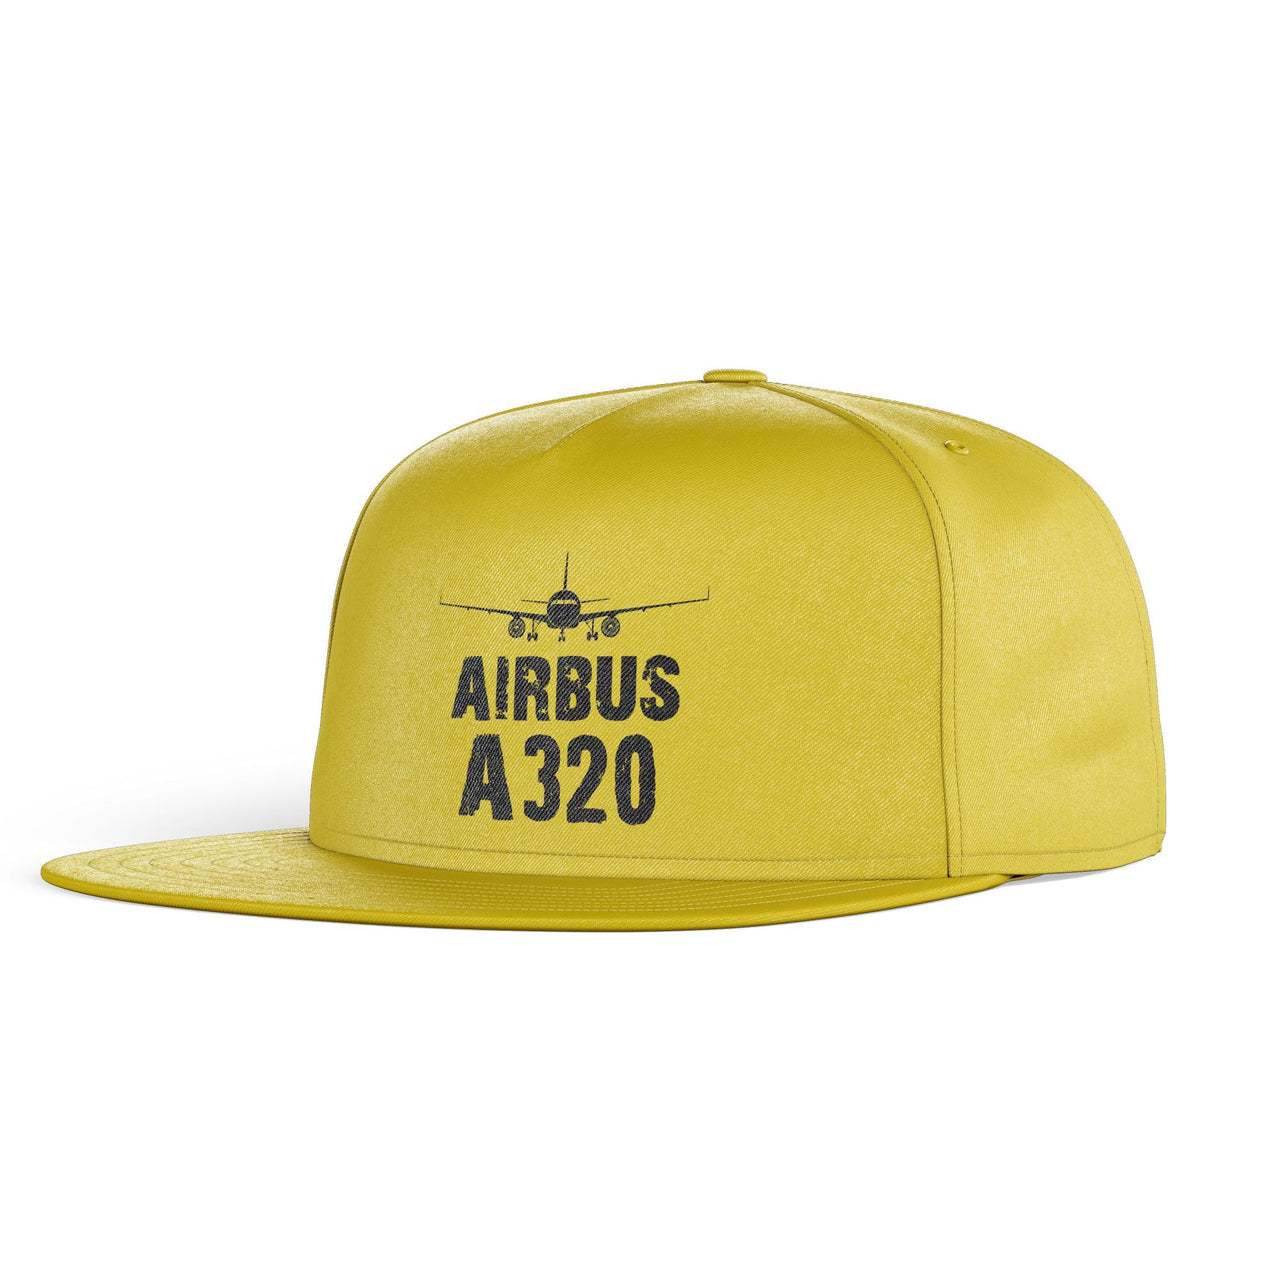 Airbus A320 & Plane Designed Snapback Caps & Hats